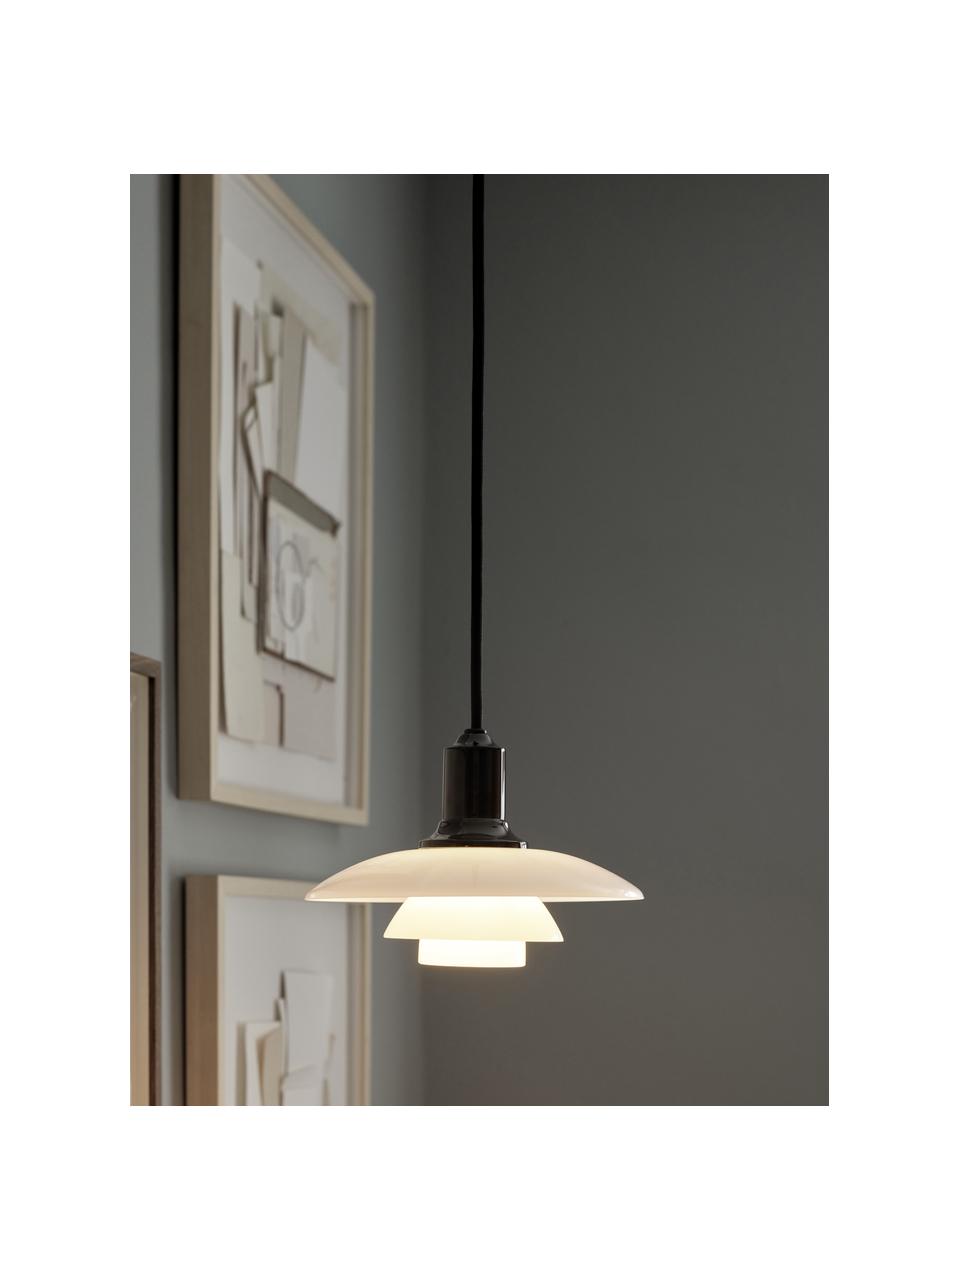 Kleine hanglamp PH 2/1, mondgeblazen, Lampenkap: opaalglas, mondgeblazen, Zwart, wit, Ø 20 x H 14 cm